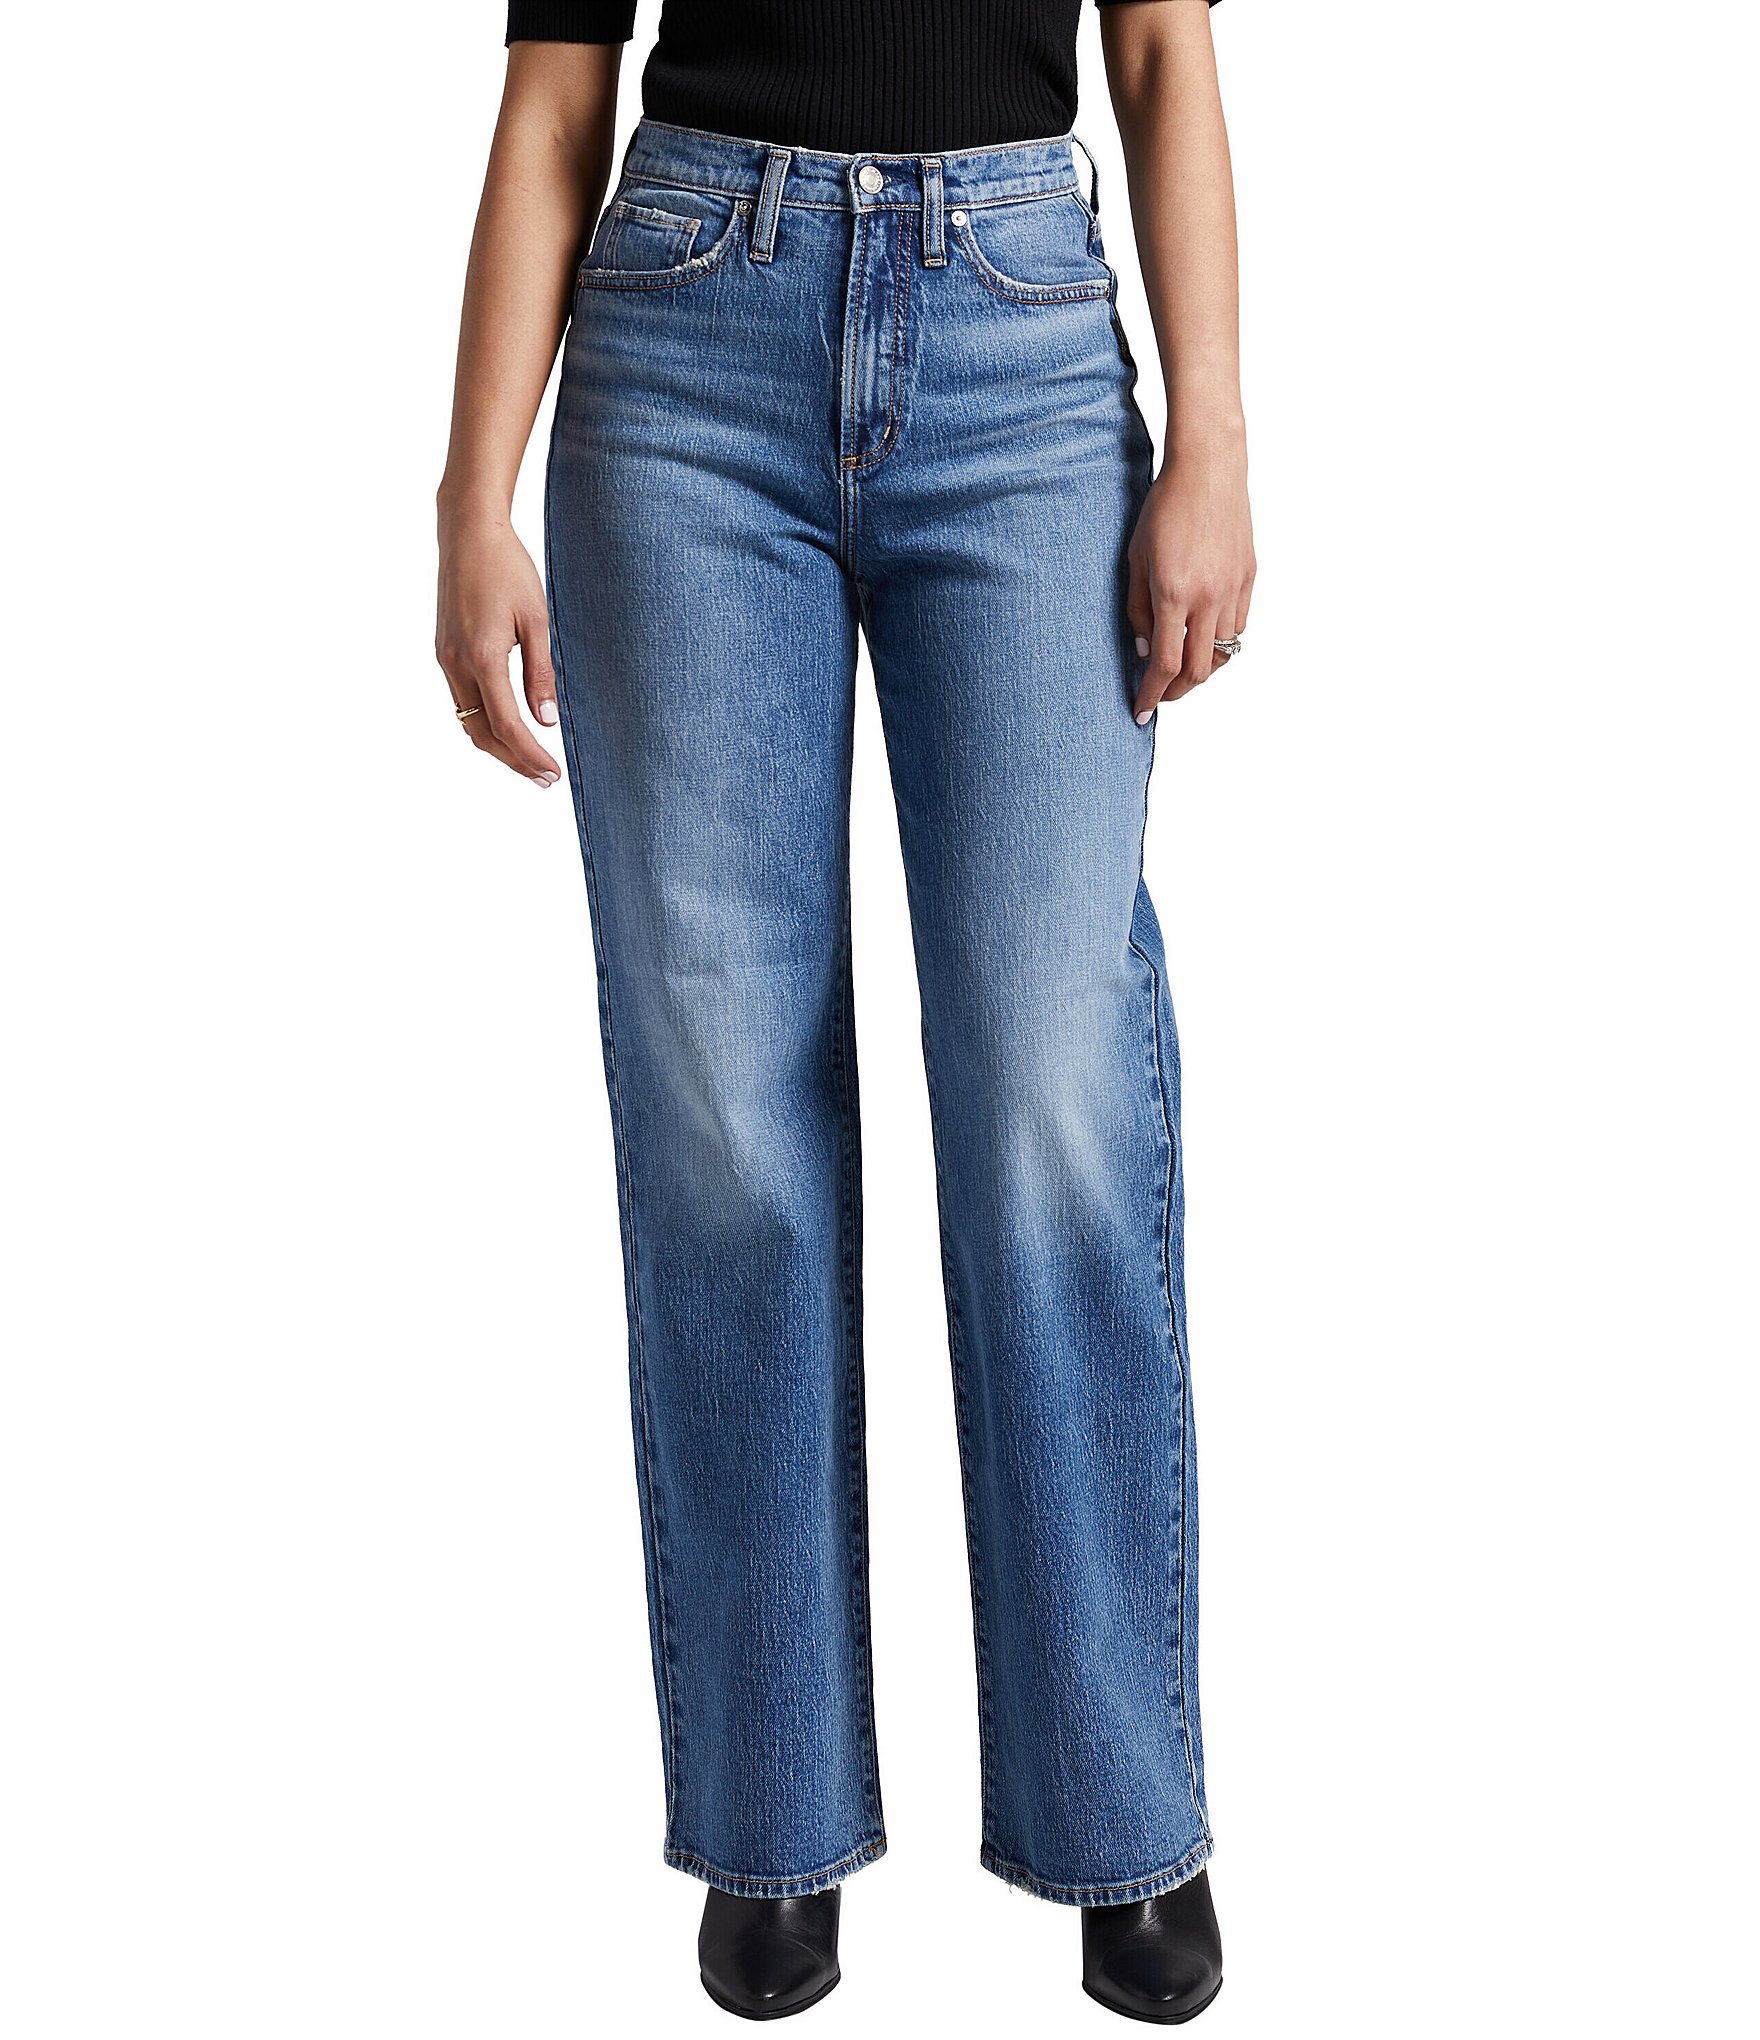 New Men Ripped Jeans Fashion Slim Boys Pants Casual Summer Denim Long  Trouser | eBay